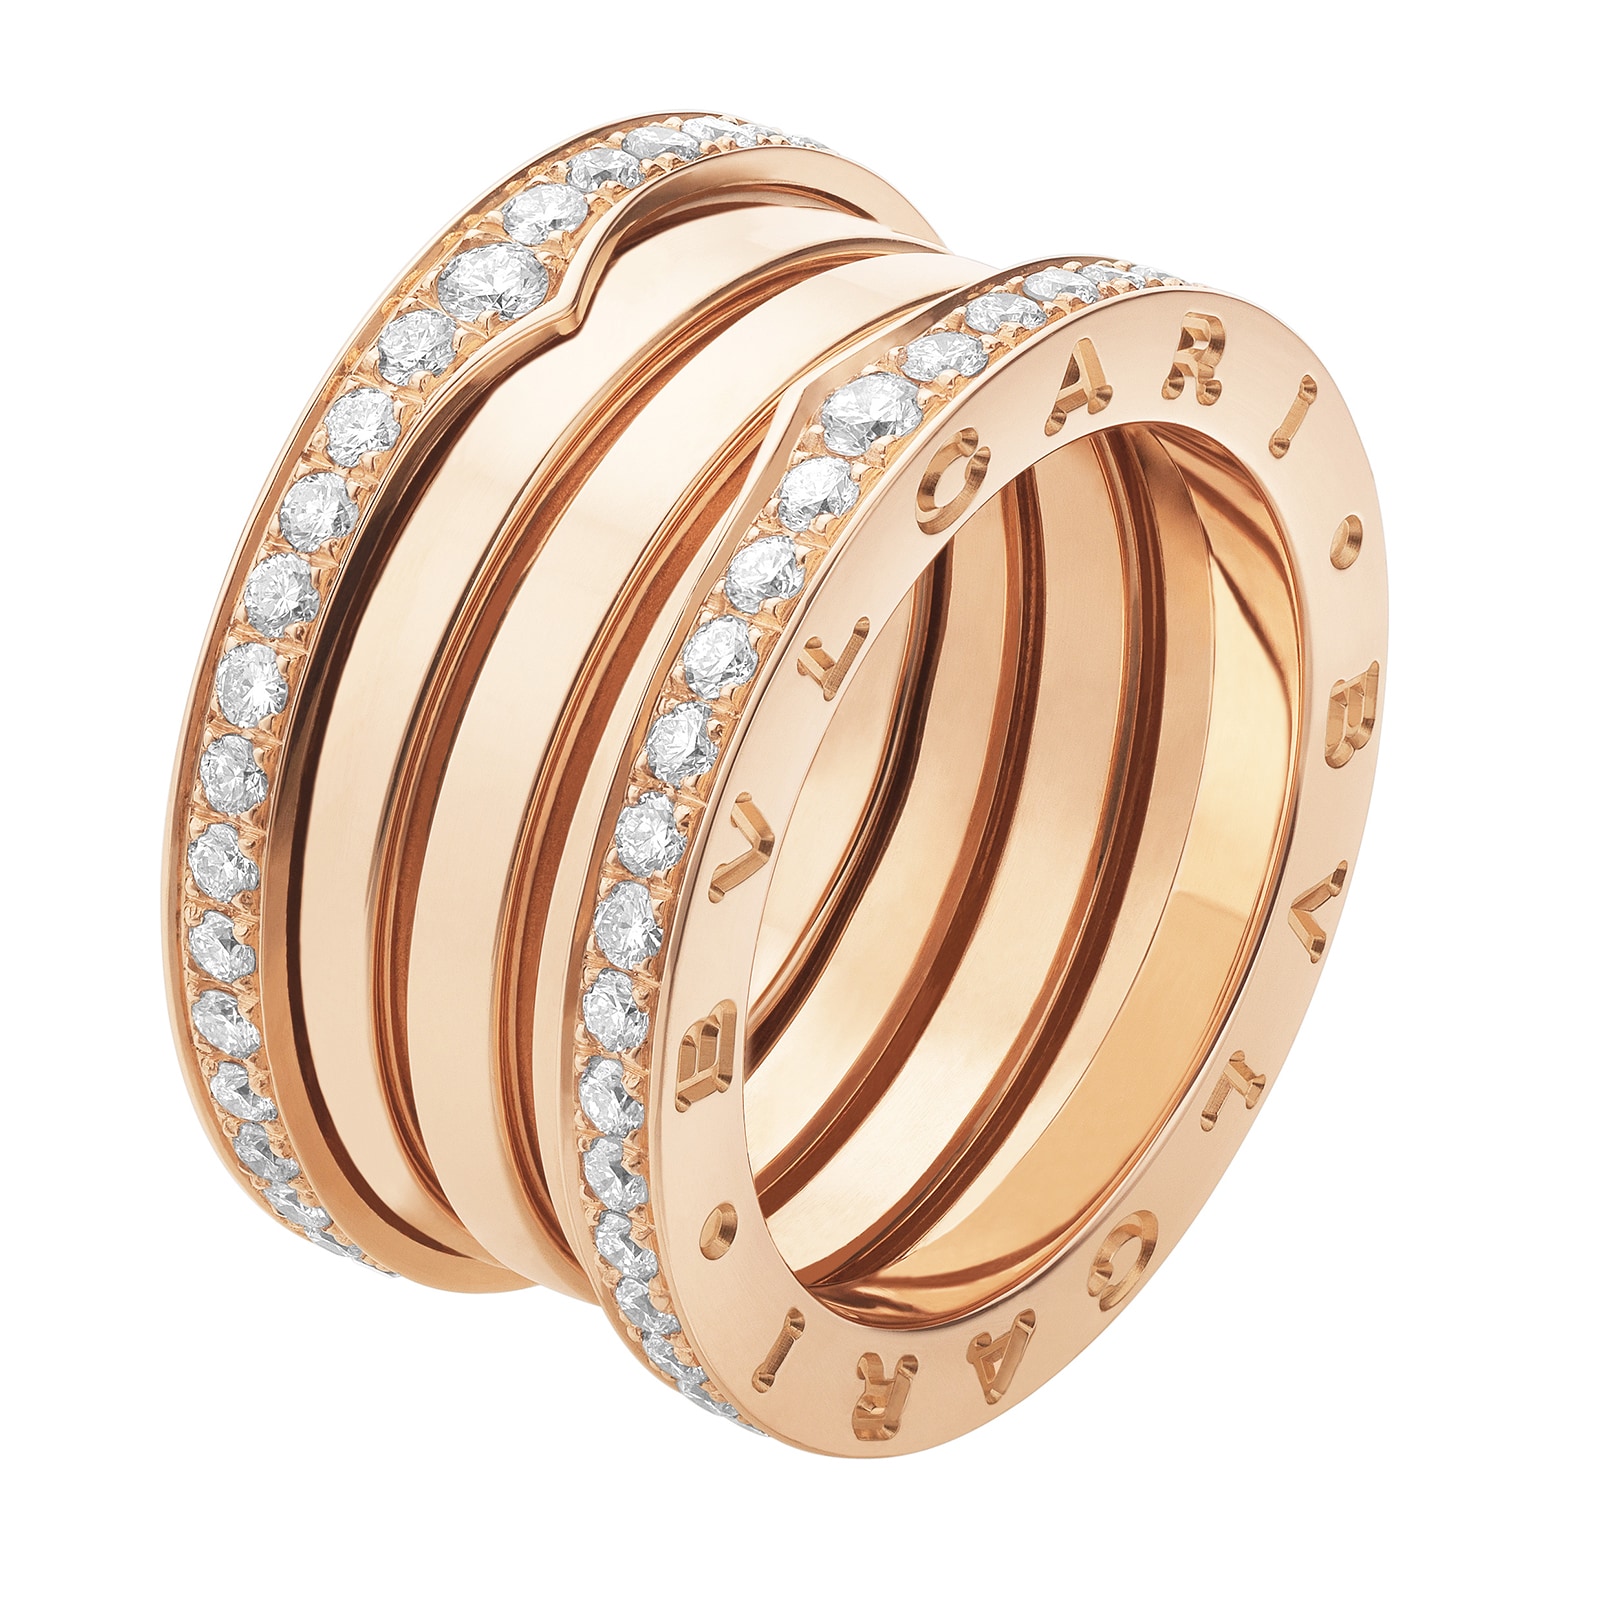 18k Rose Gold B.ZERO1 4 Band 1.30cttw Diamond Ring - Size 6.5